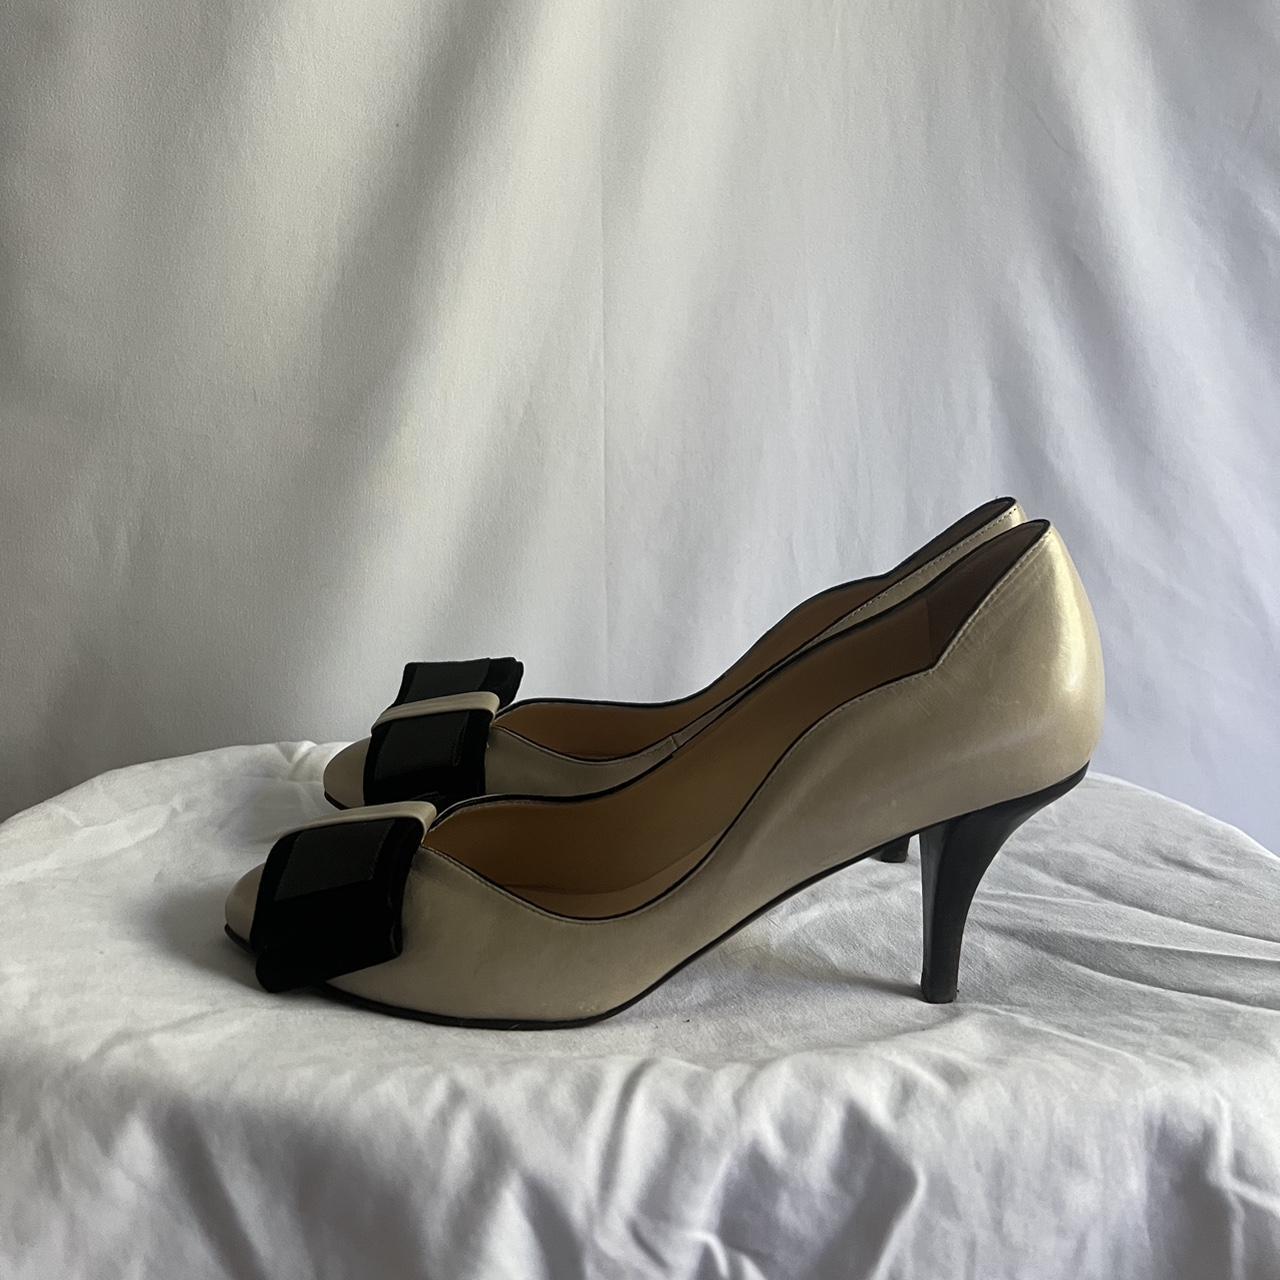 classy little heels from France